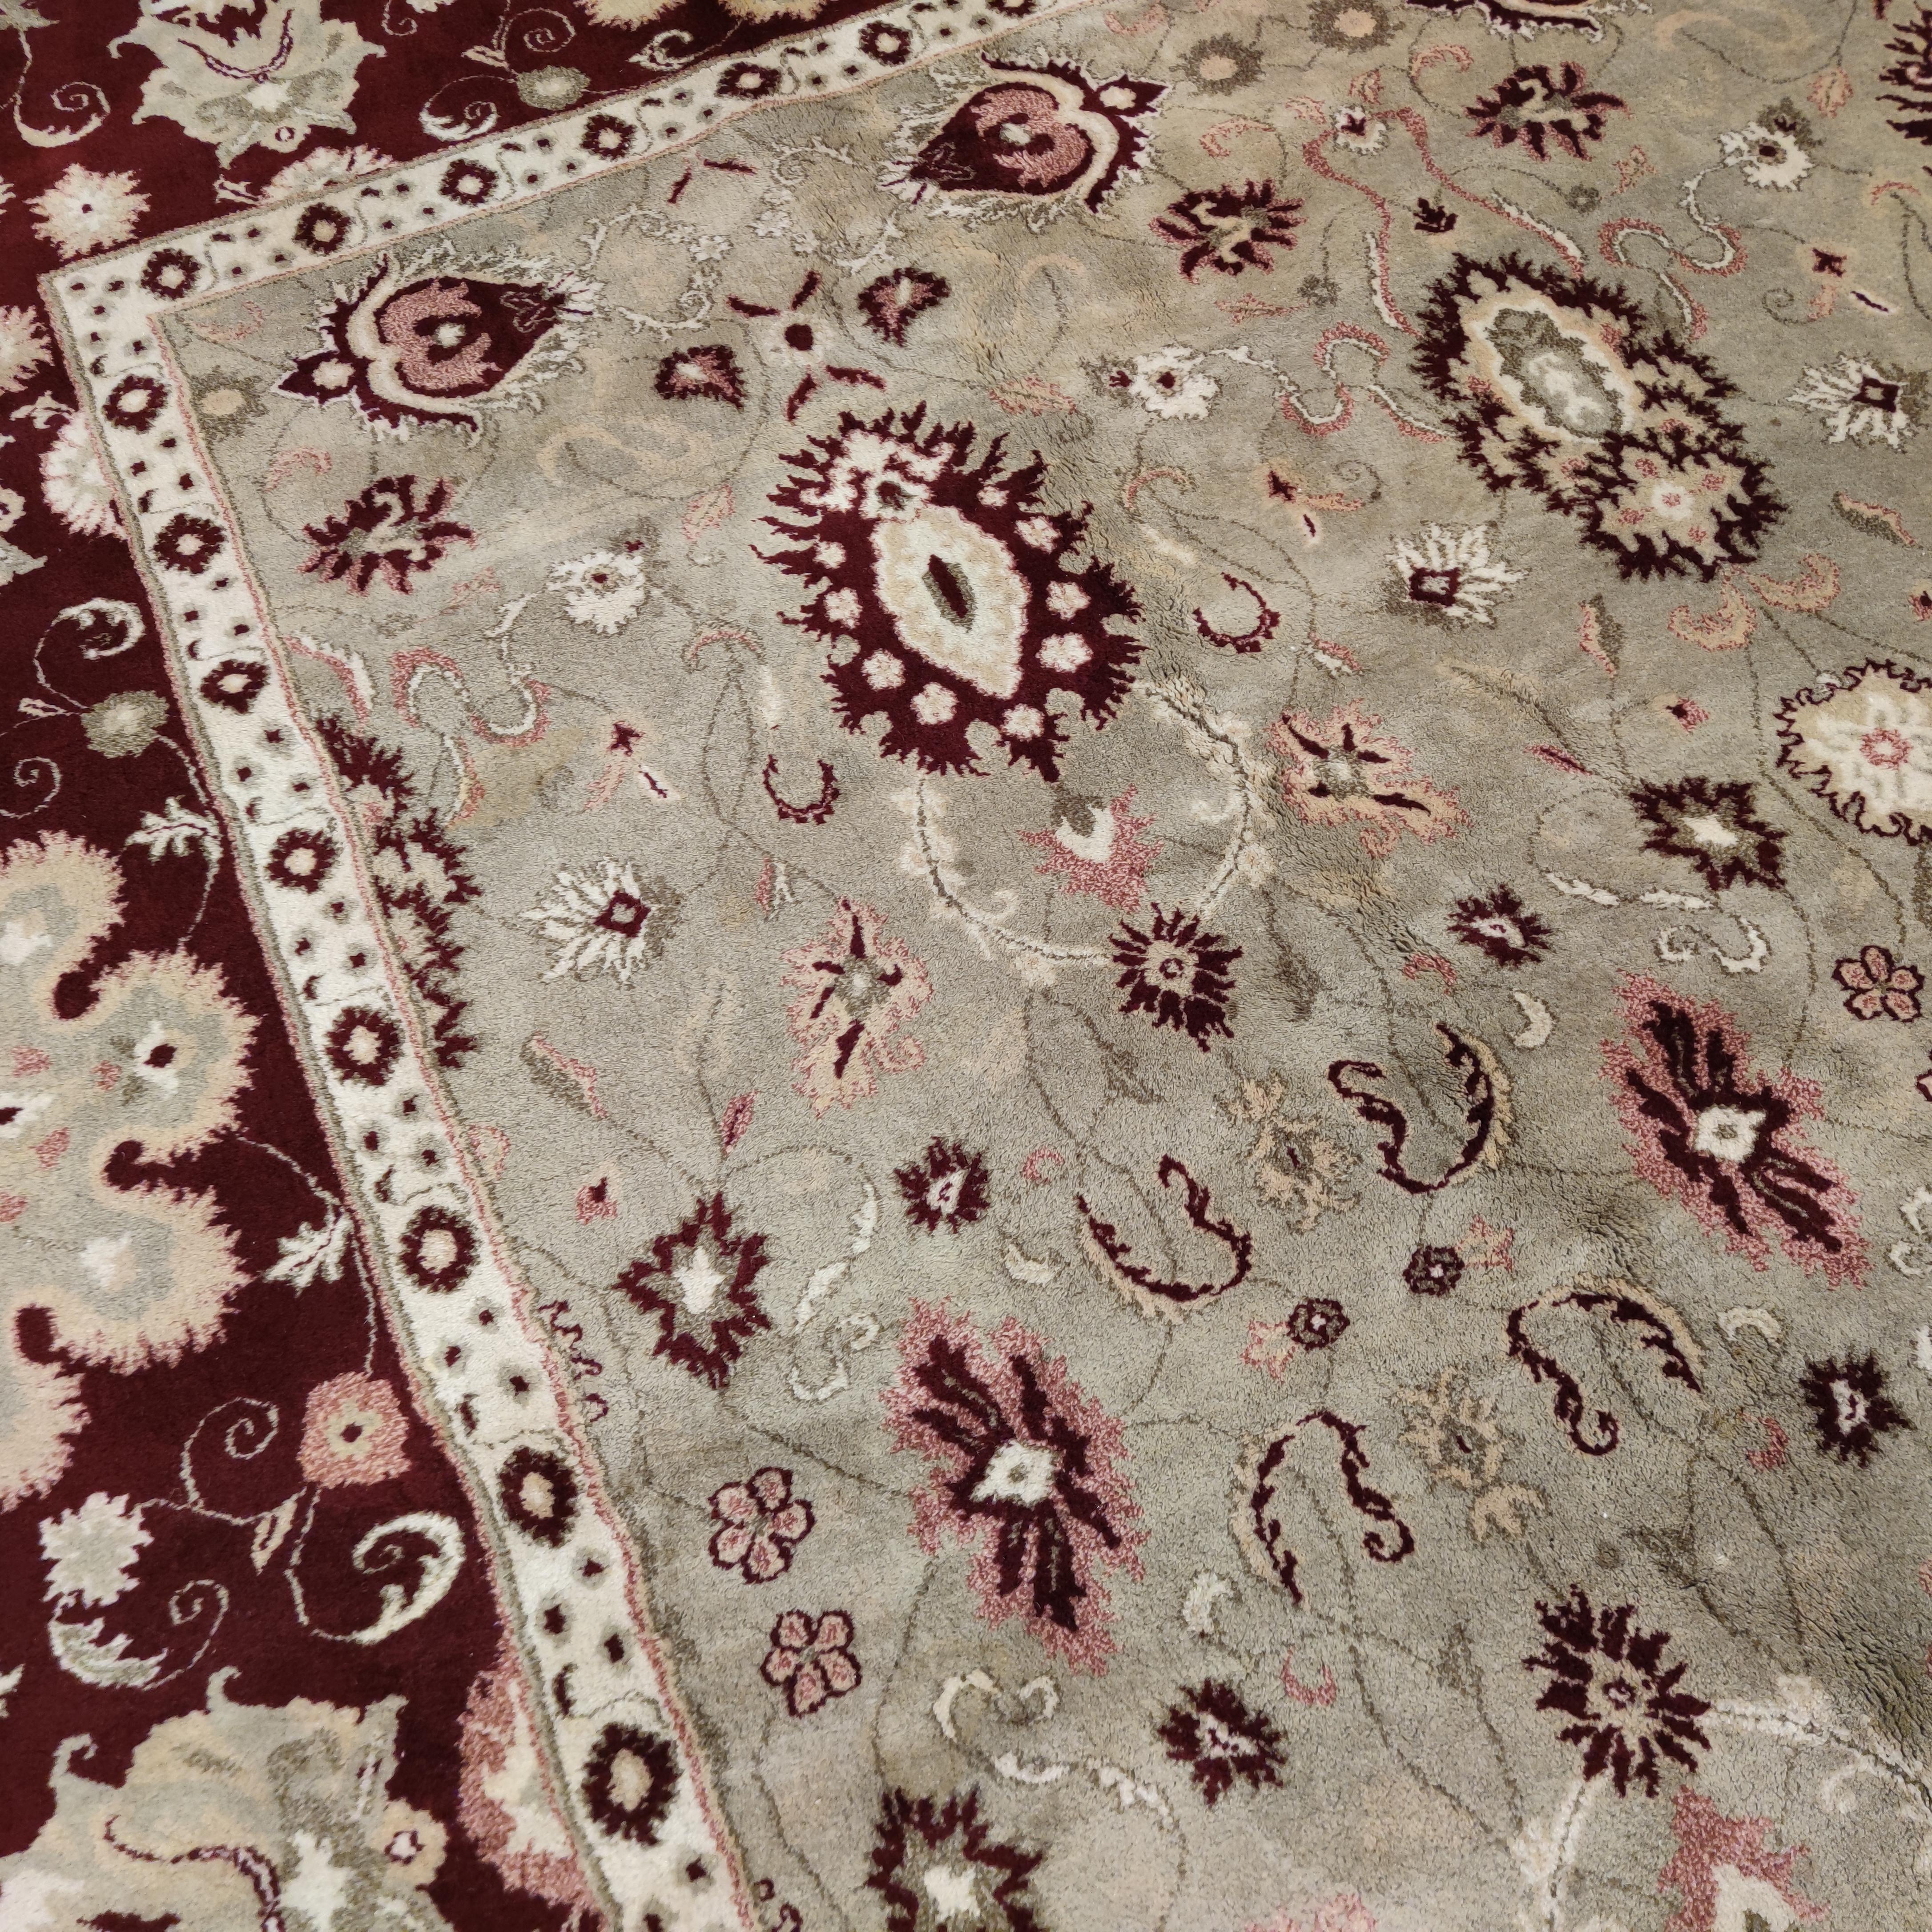 Oversize Vintage Celadon Green All-Over Design Agra Carpet with Ruby Red Border For Sale 6